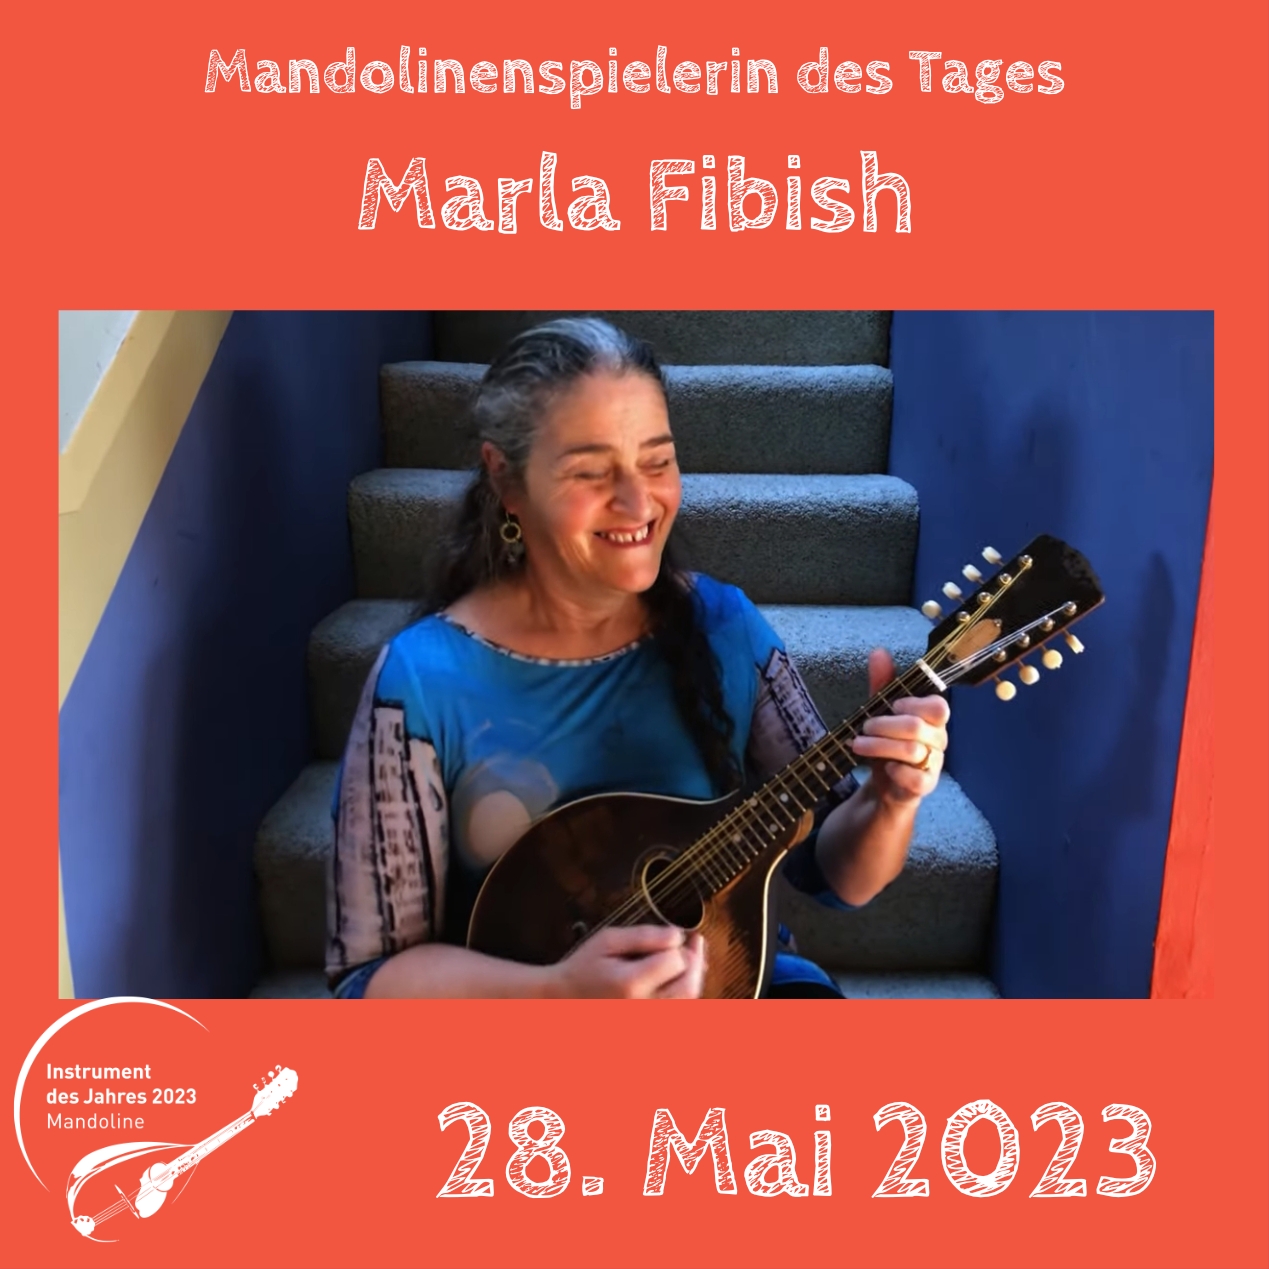 Marla Fibish Mandoline Instrument des Jahres 2023 Mandolinenspieler Mandolinenspielerin des Tages